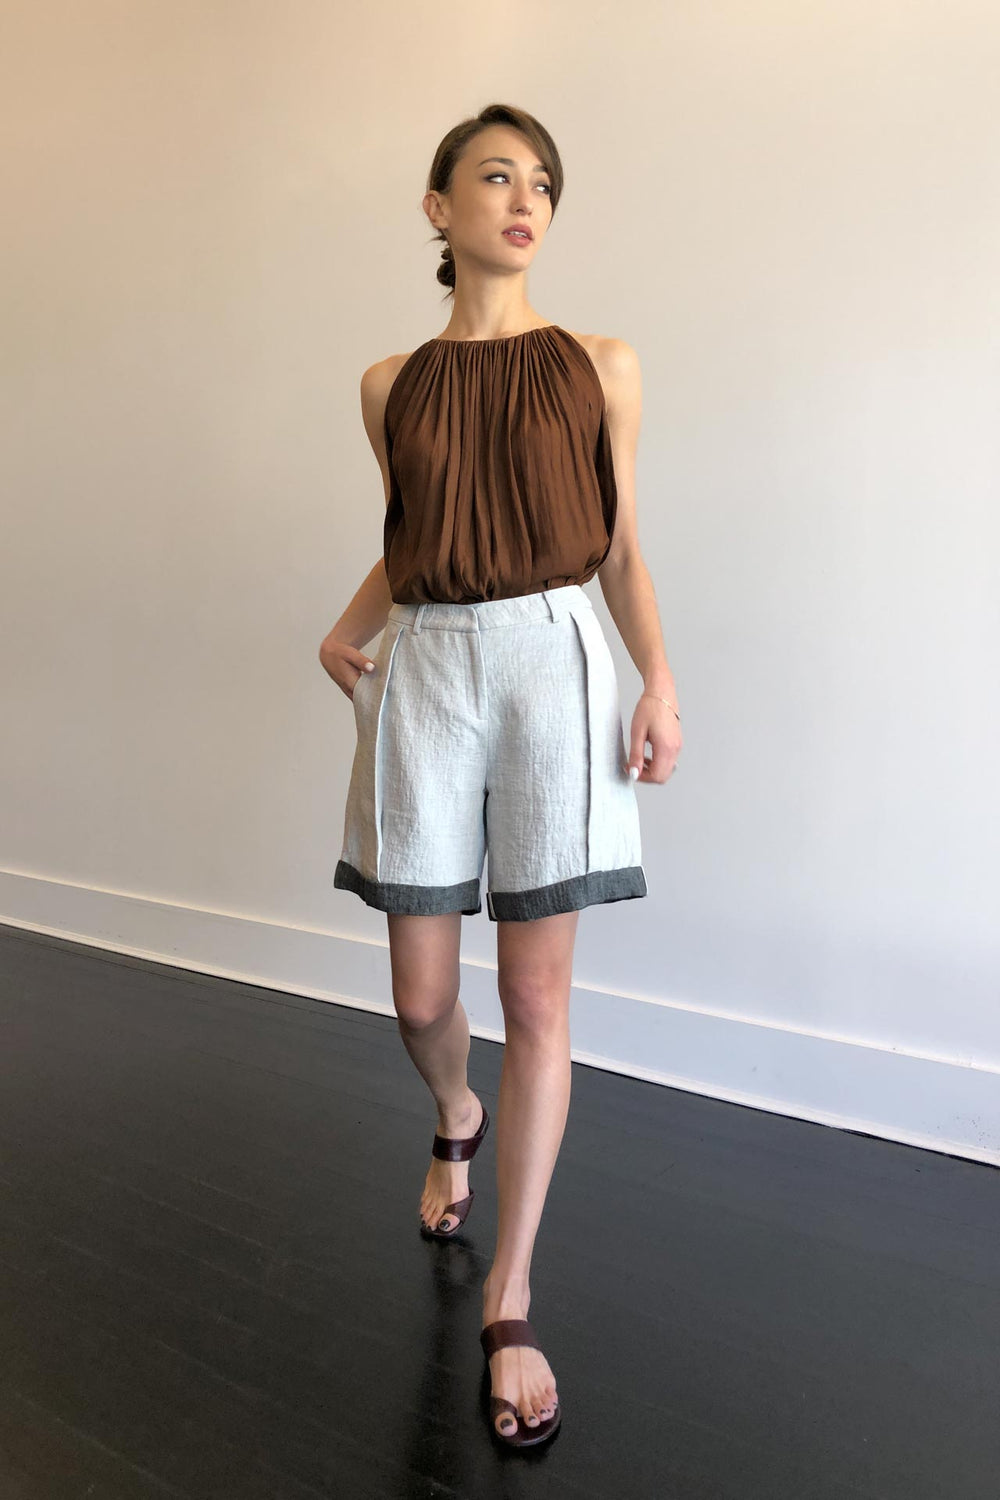 Fashion Designer CARL KAPP collection | Mila Onesize Fits All cocktail Top Brown | Sydney Australia